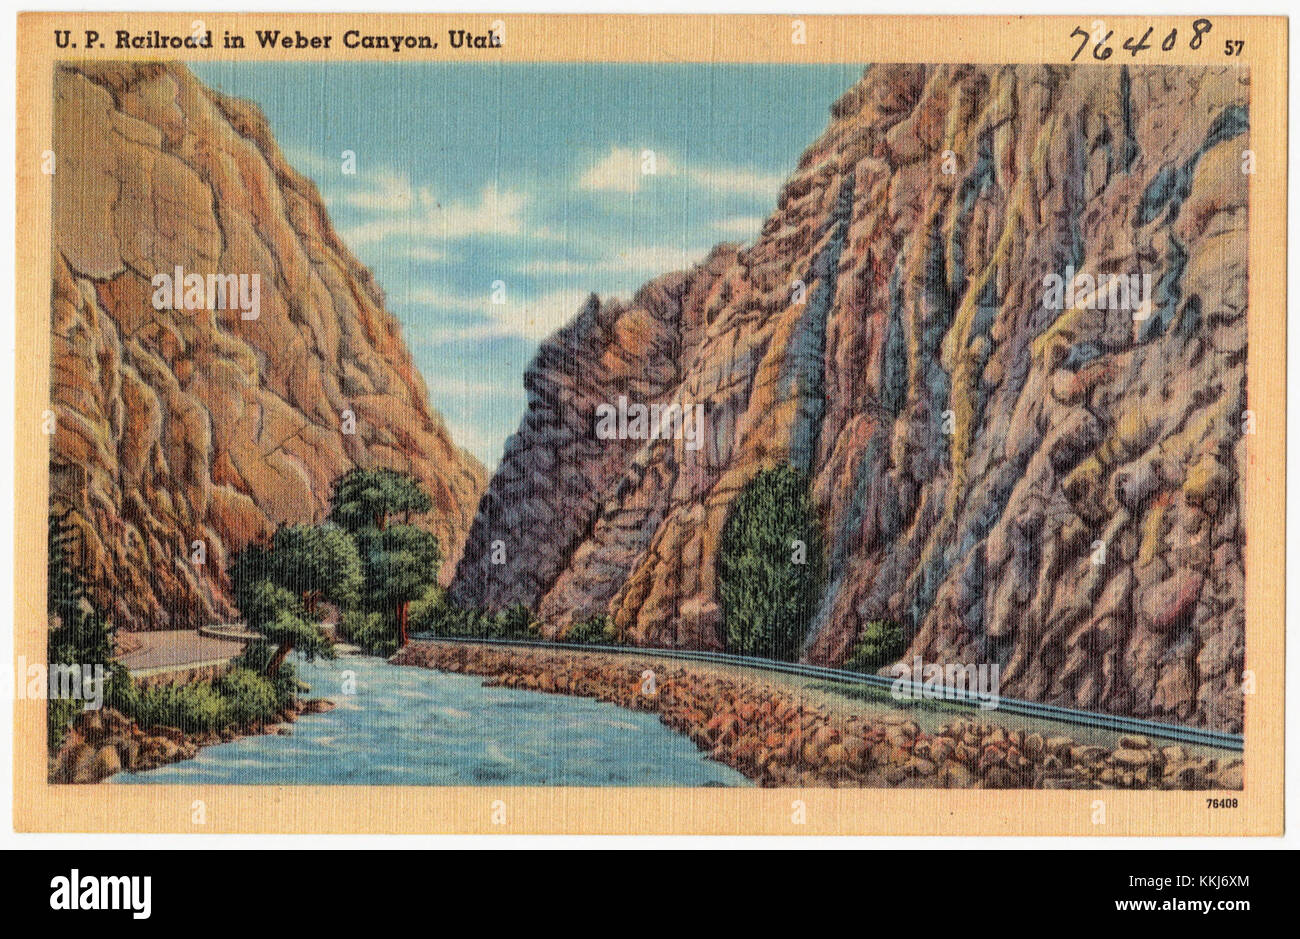 U. P. Railroad in Weber Canyon, Utah (76408) Stock Photo